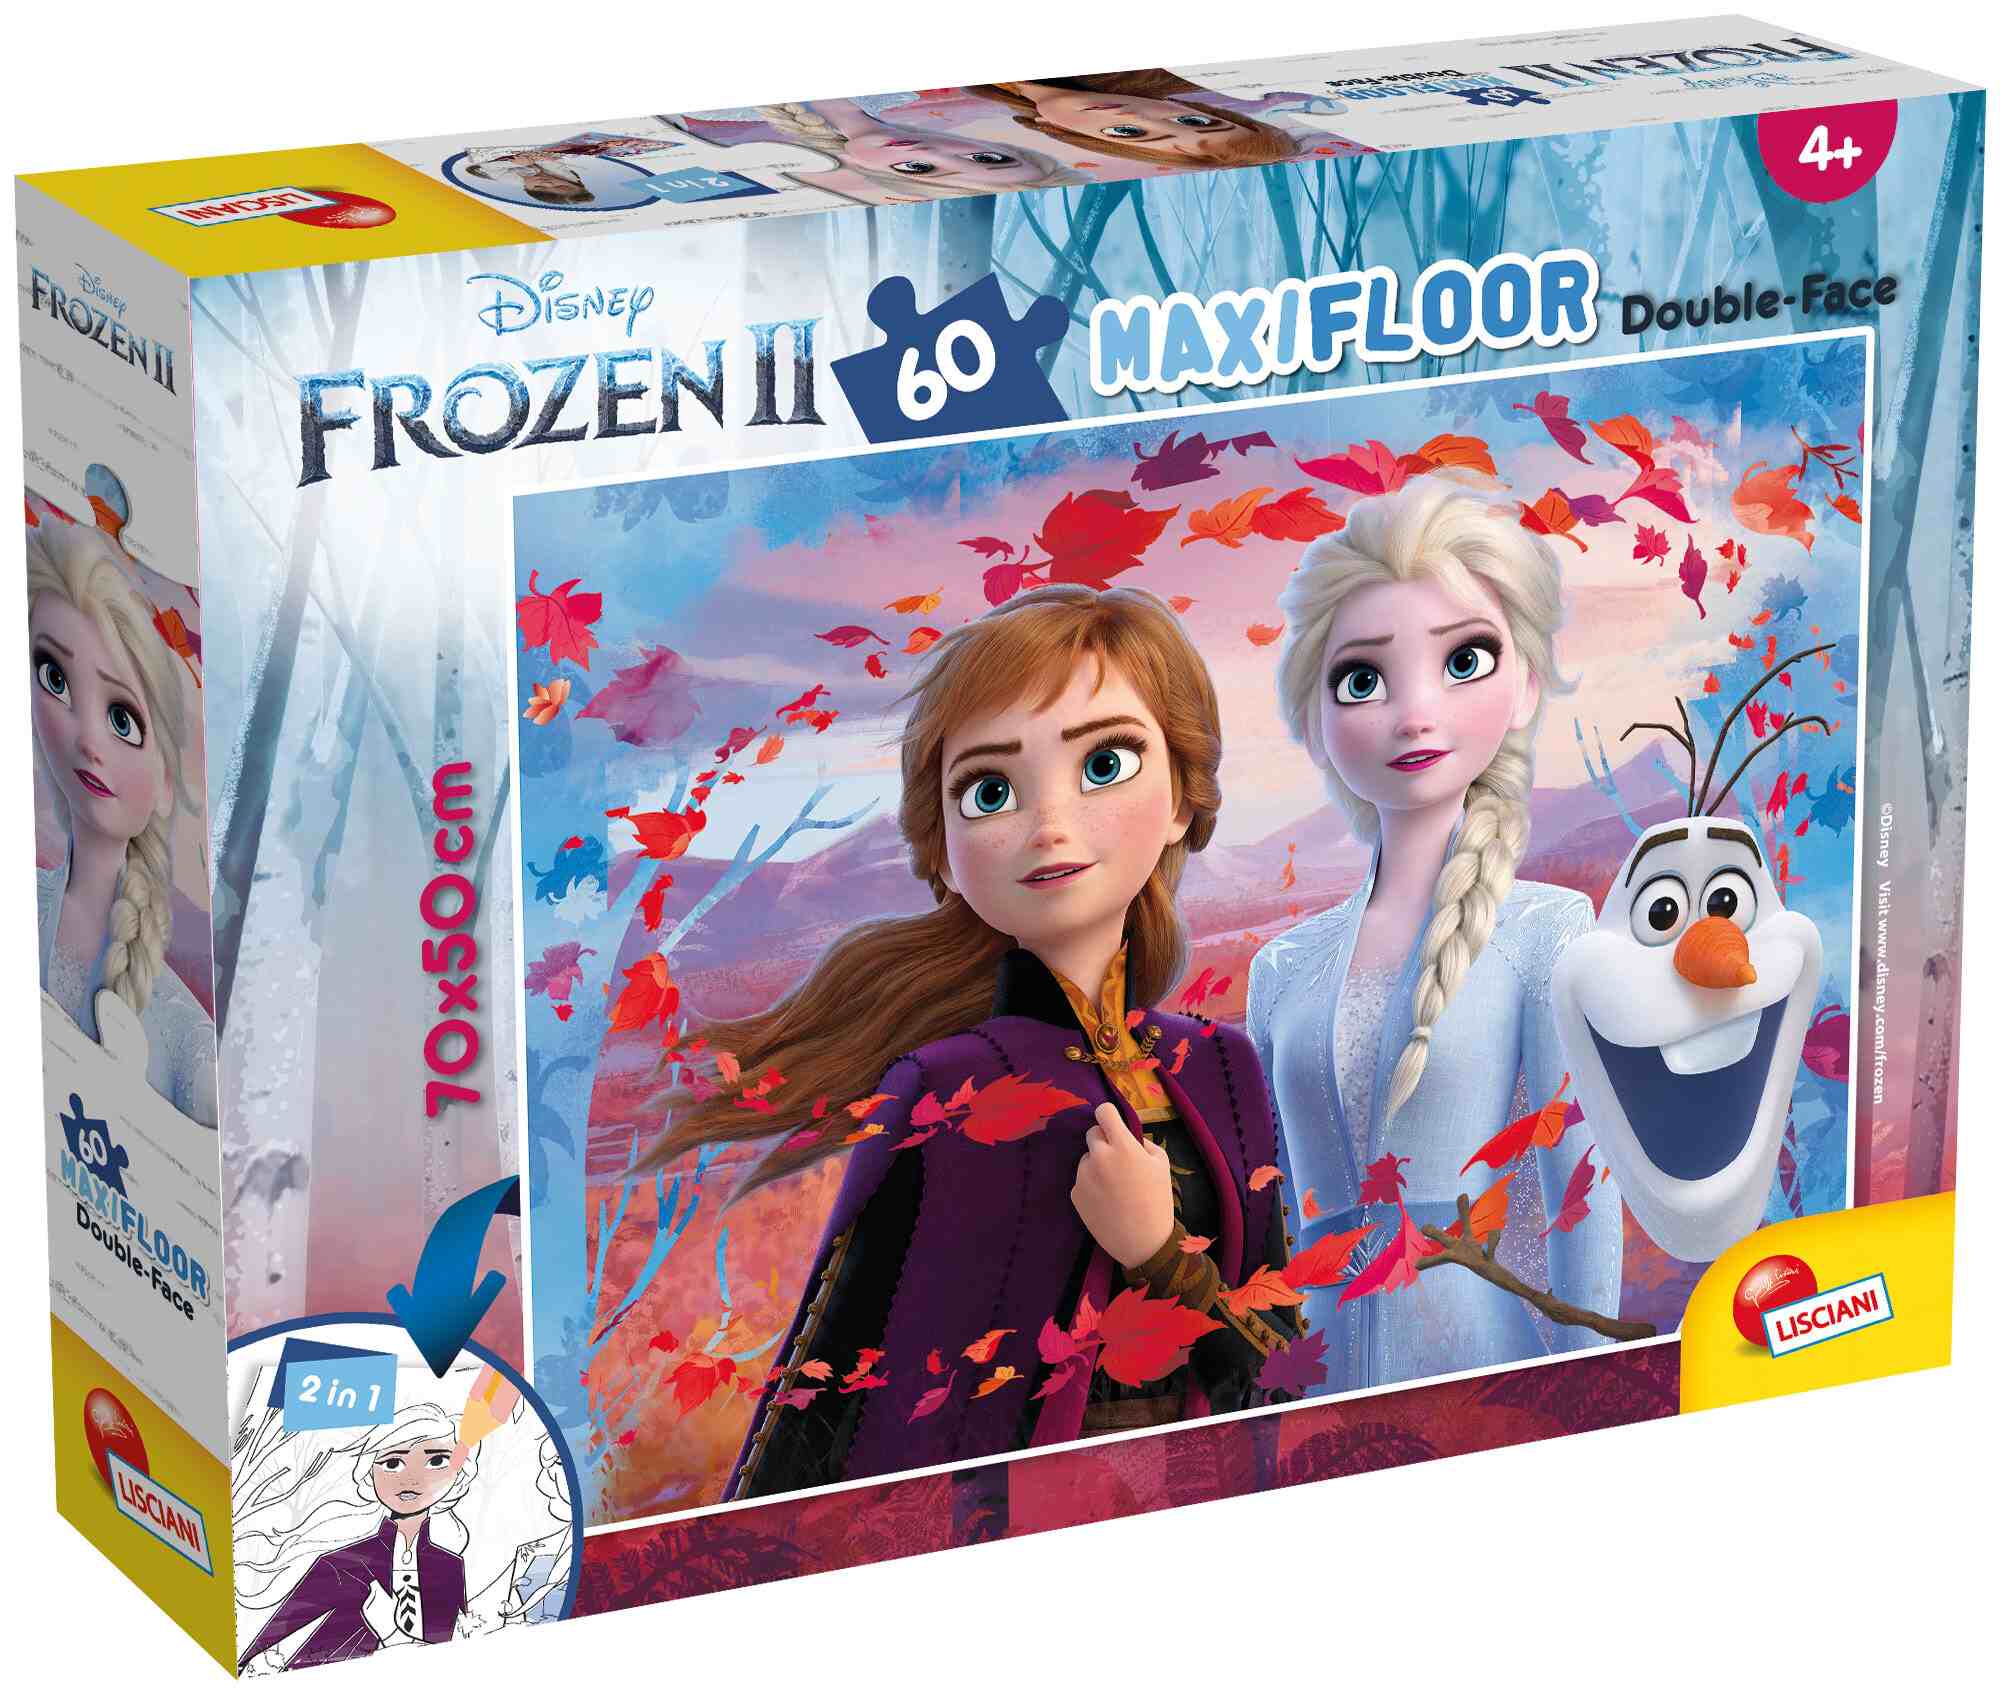 Disney puzzle df maxi floor 60 frozen 2 - DISNEY PRINCESS, LISCIANI, Frozen